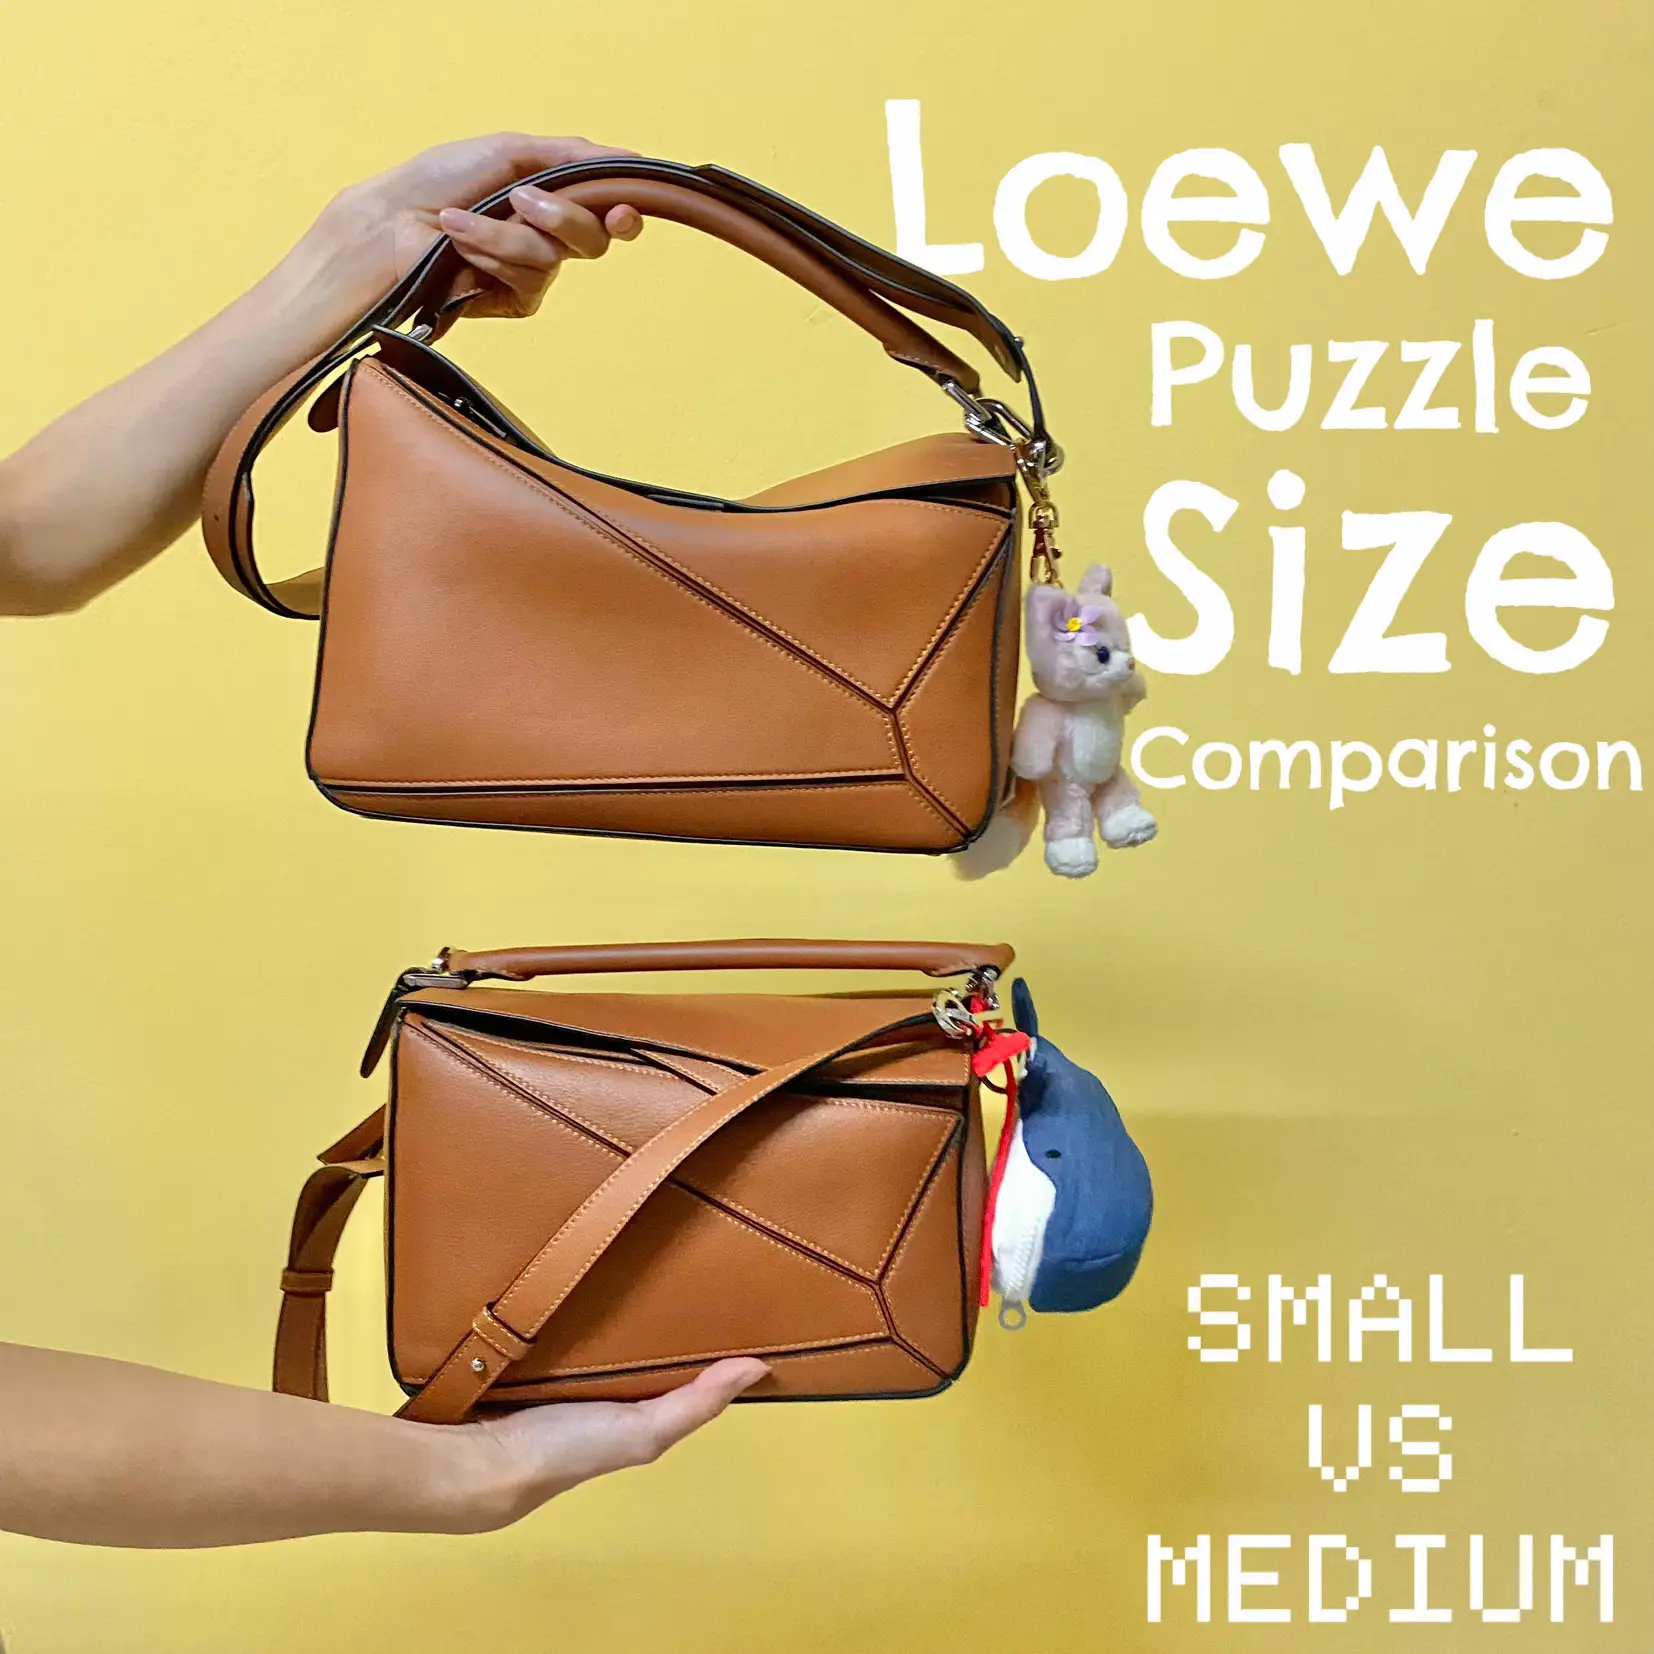 Price Comparison: Loewe Small Puzzle bag